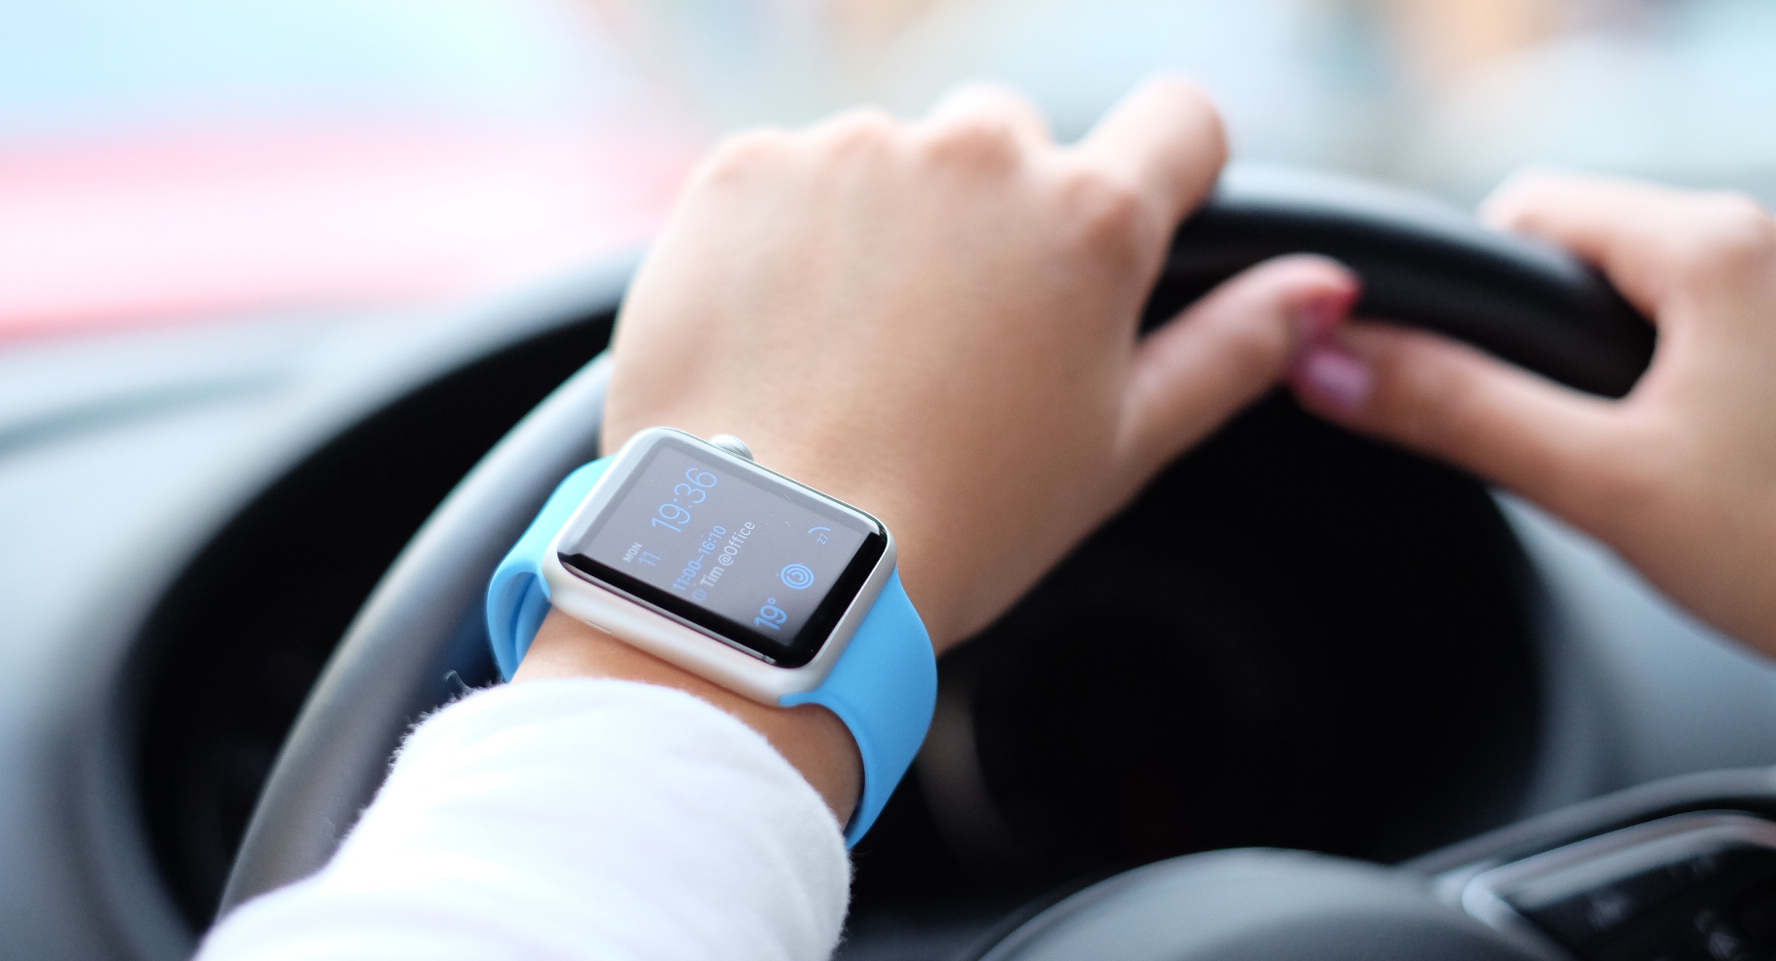 Apple Watch заменят ключи в автомобилях GM